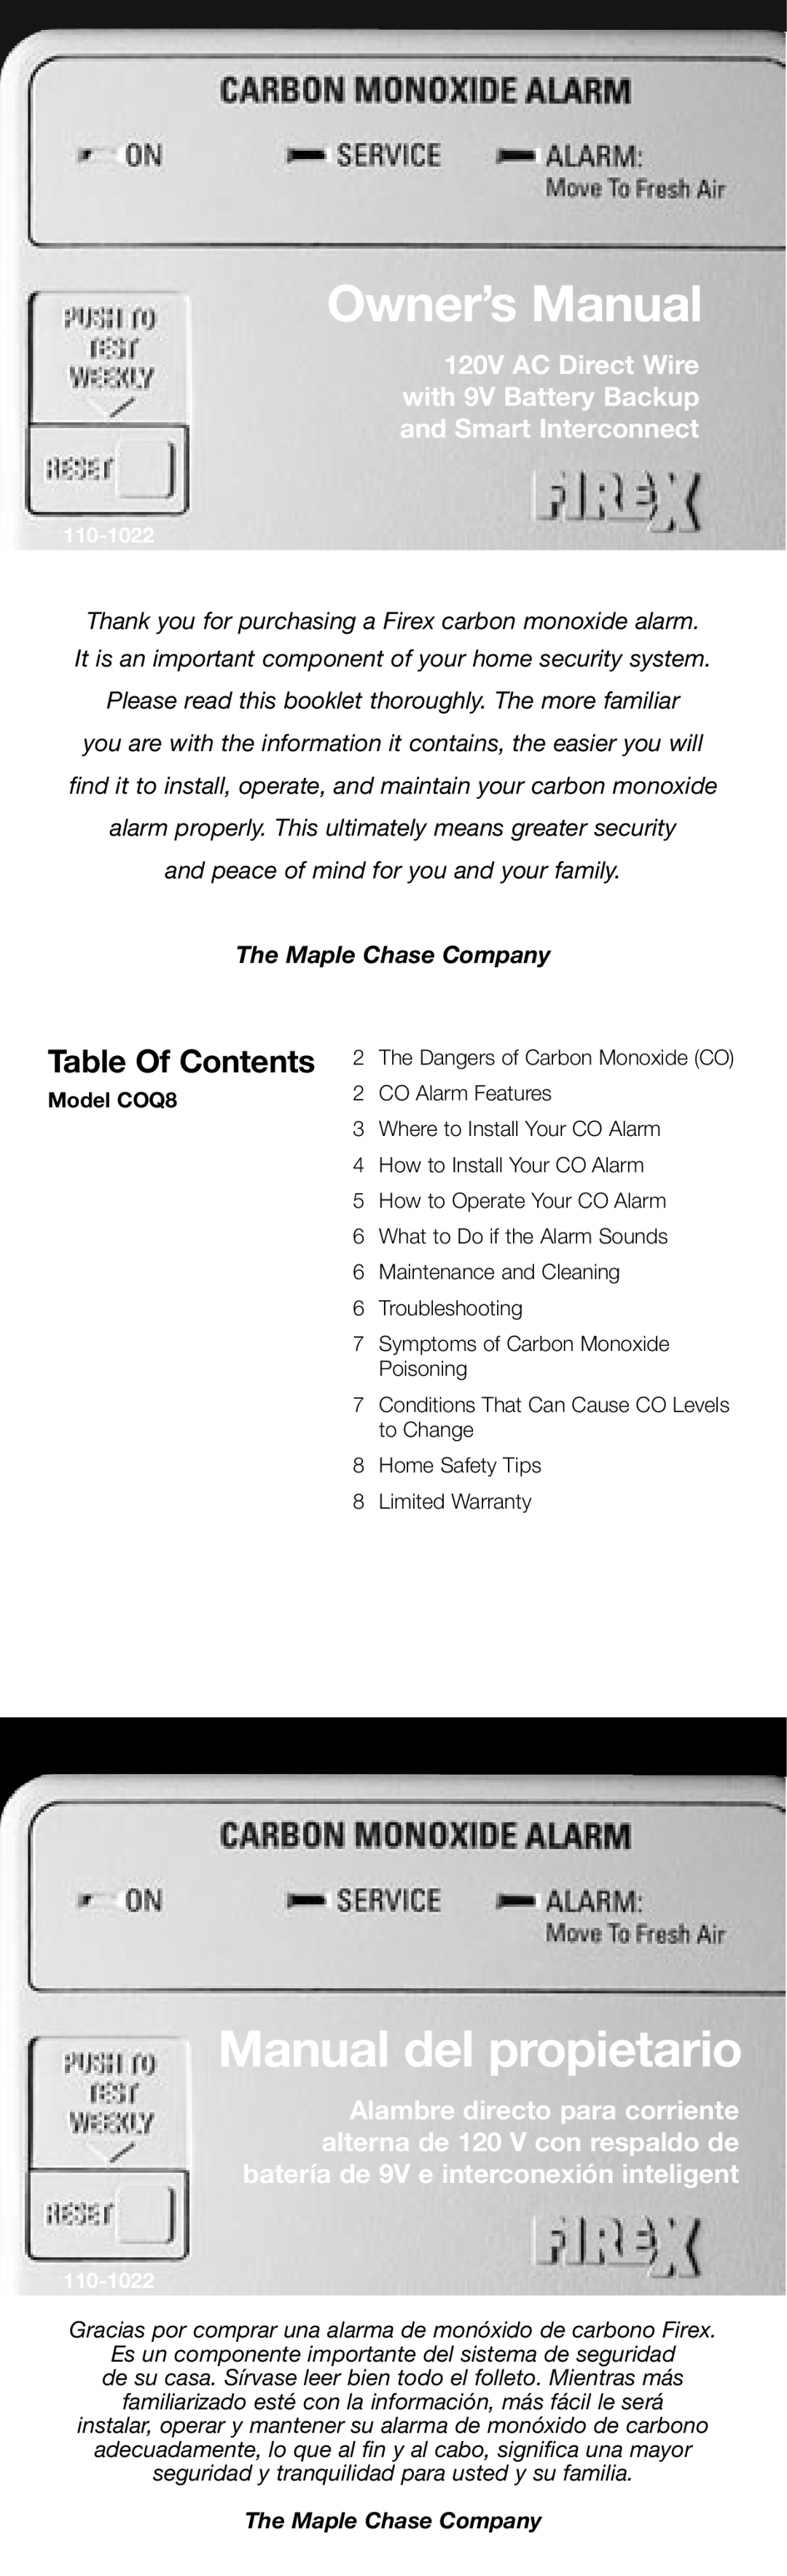 Firex pmn owner manual Table Of Contents, Manual del propietario 